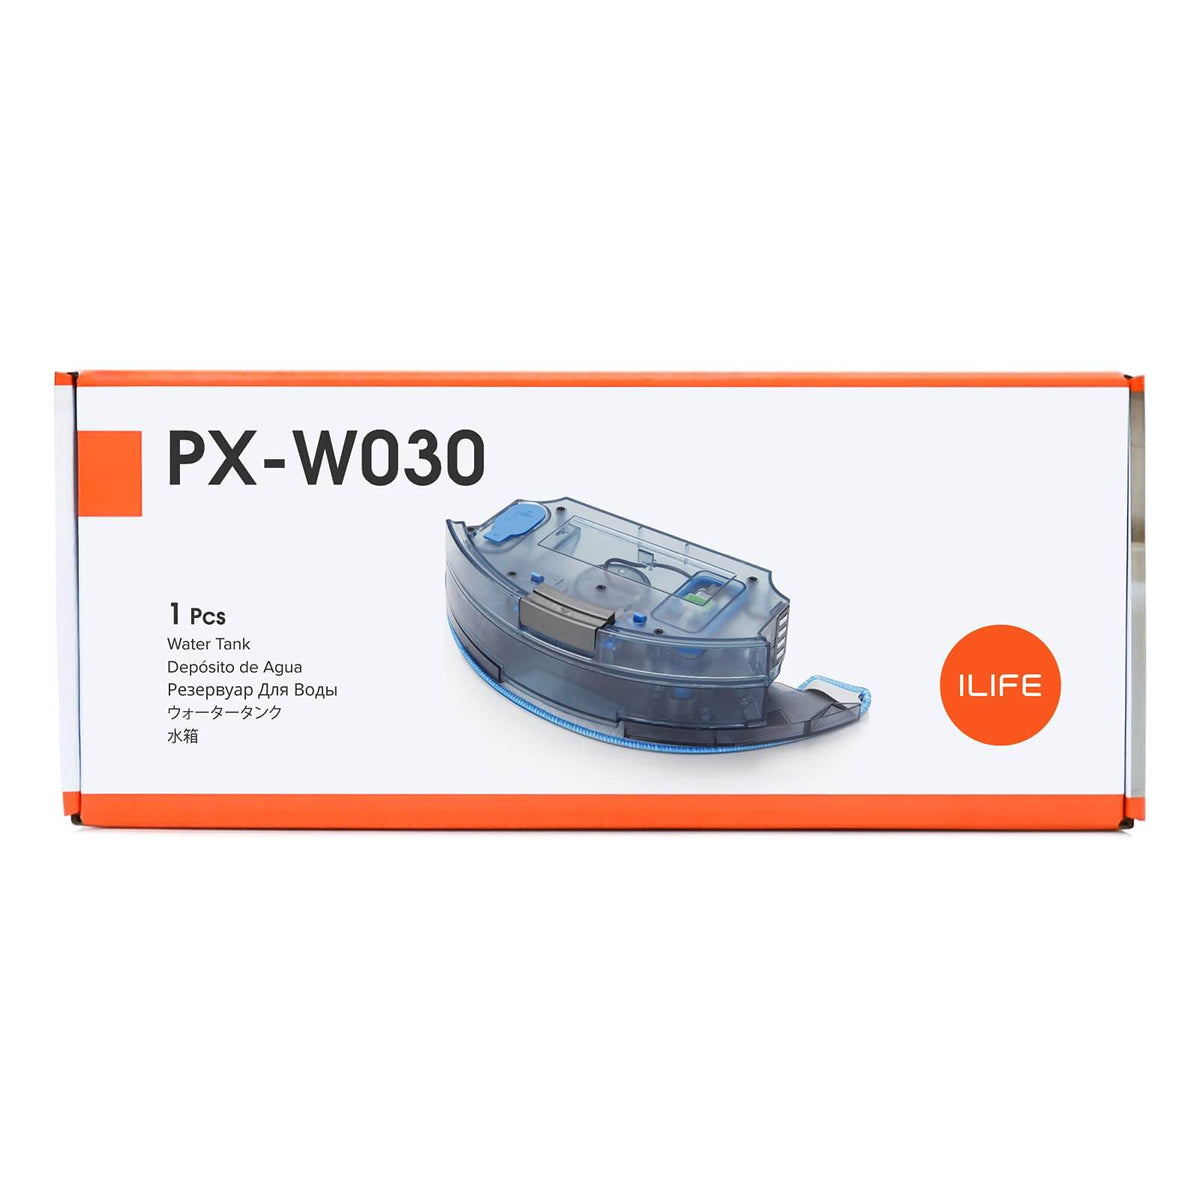 PX-W030 A10 Water Tank _1